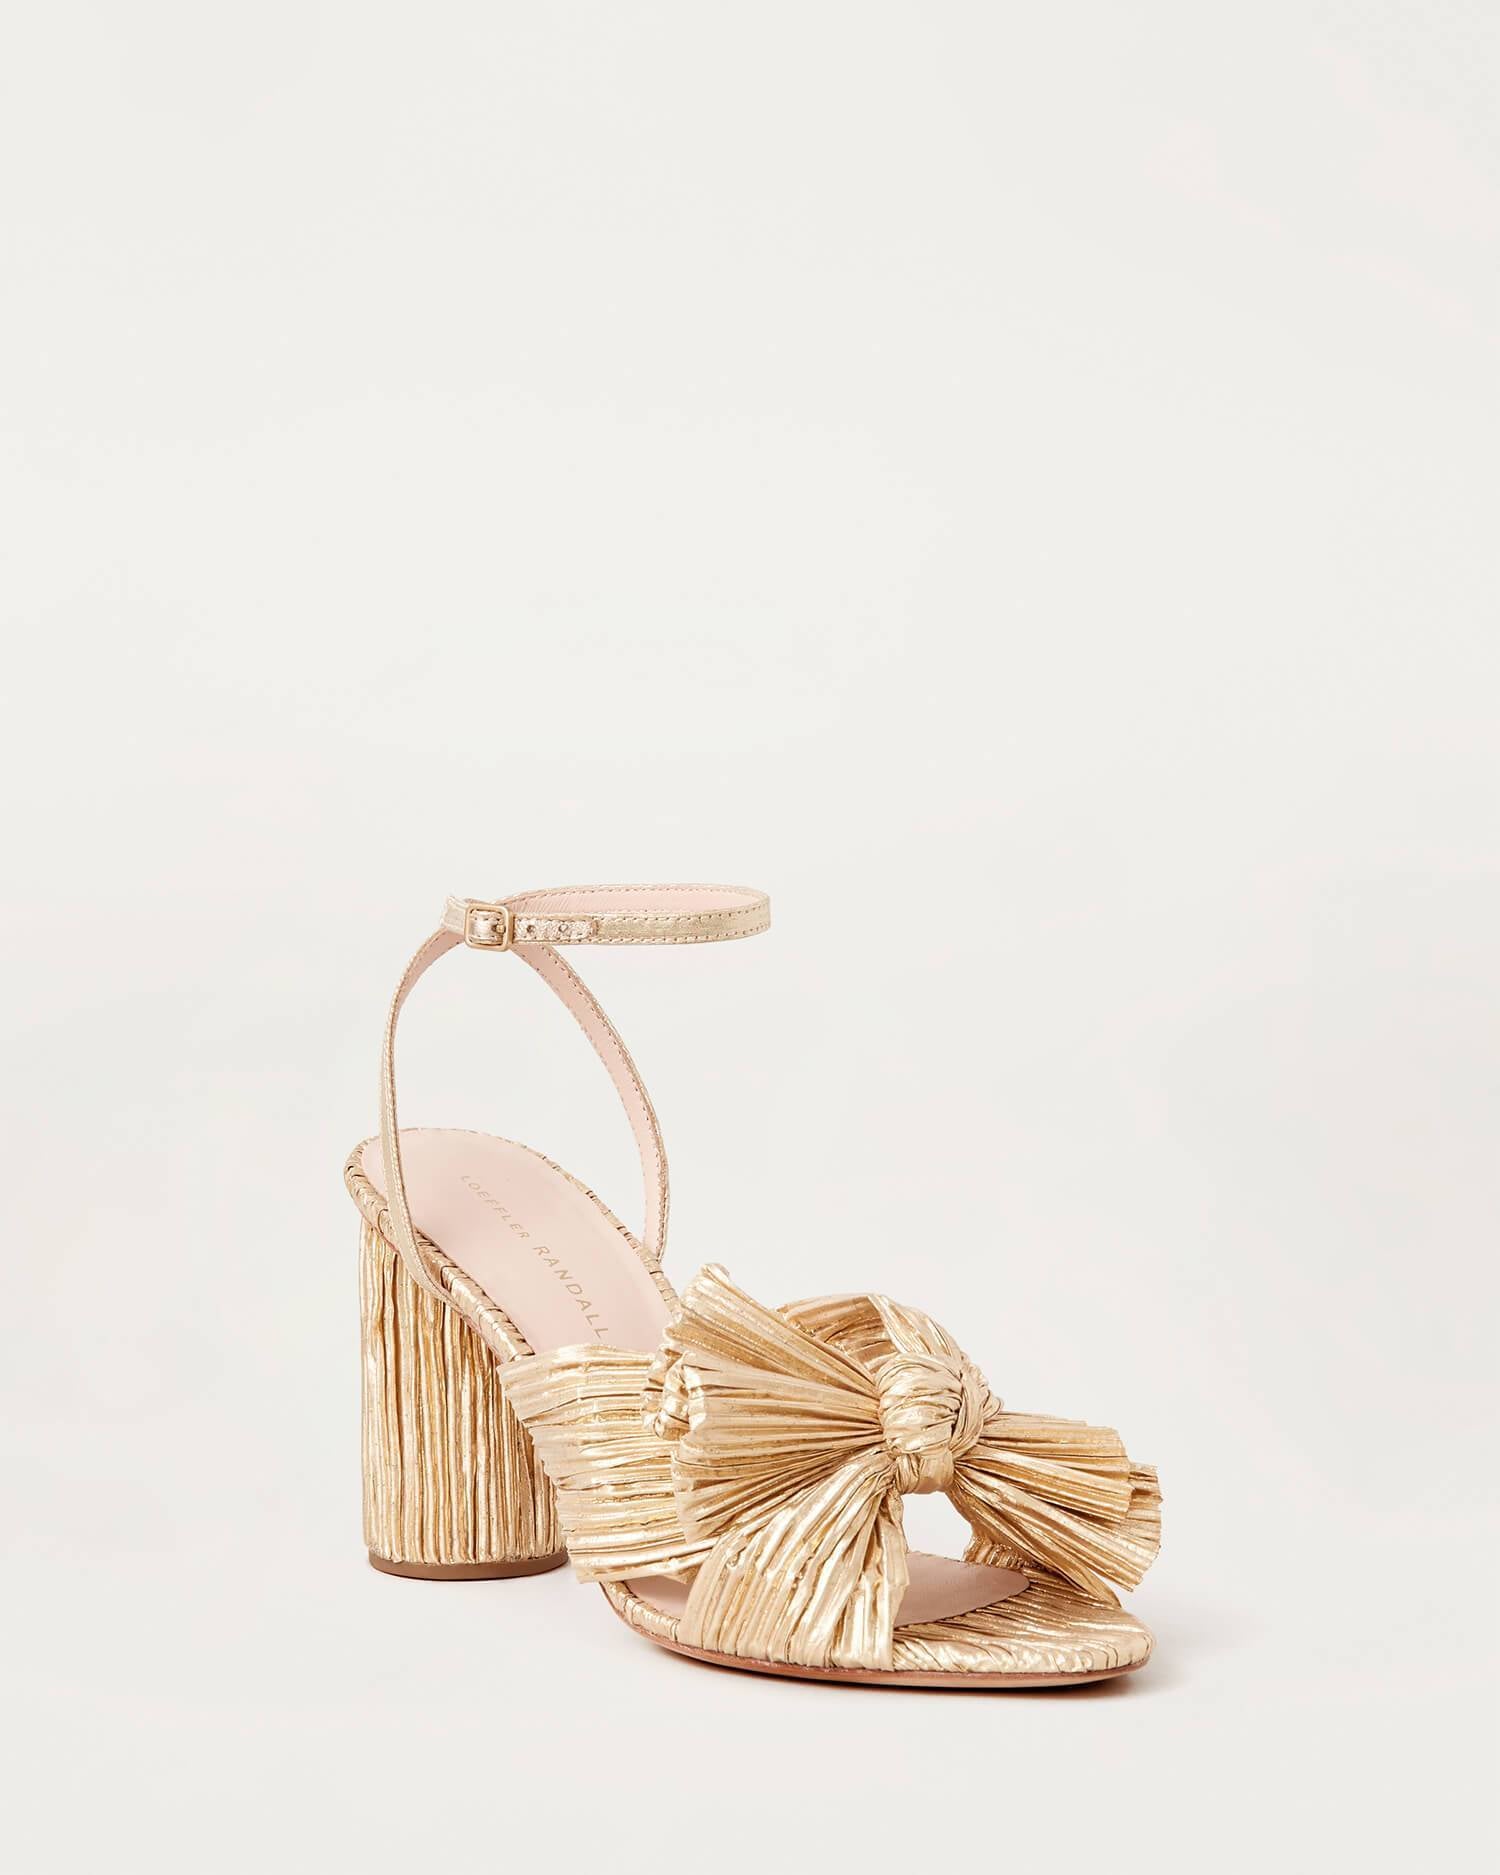 Shoes | Size 9 Rose Gold Heels | Poshmark